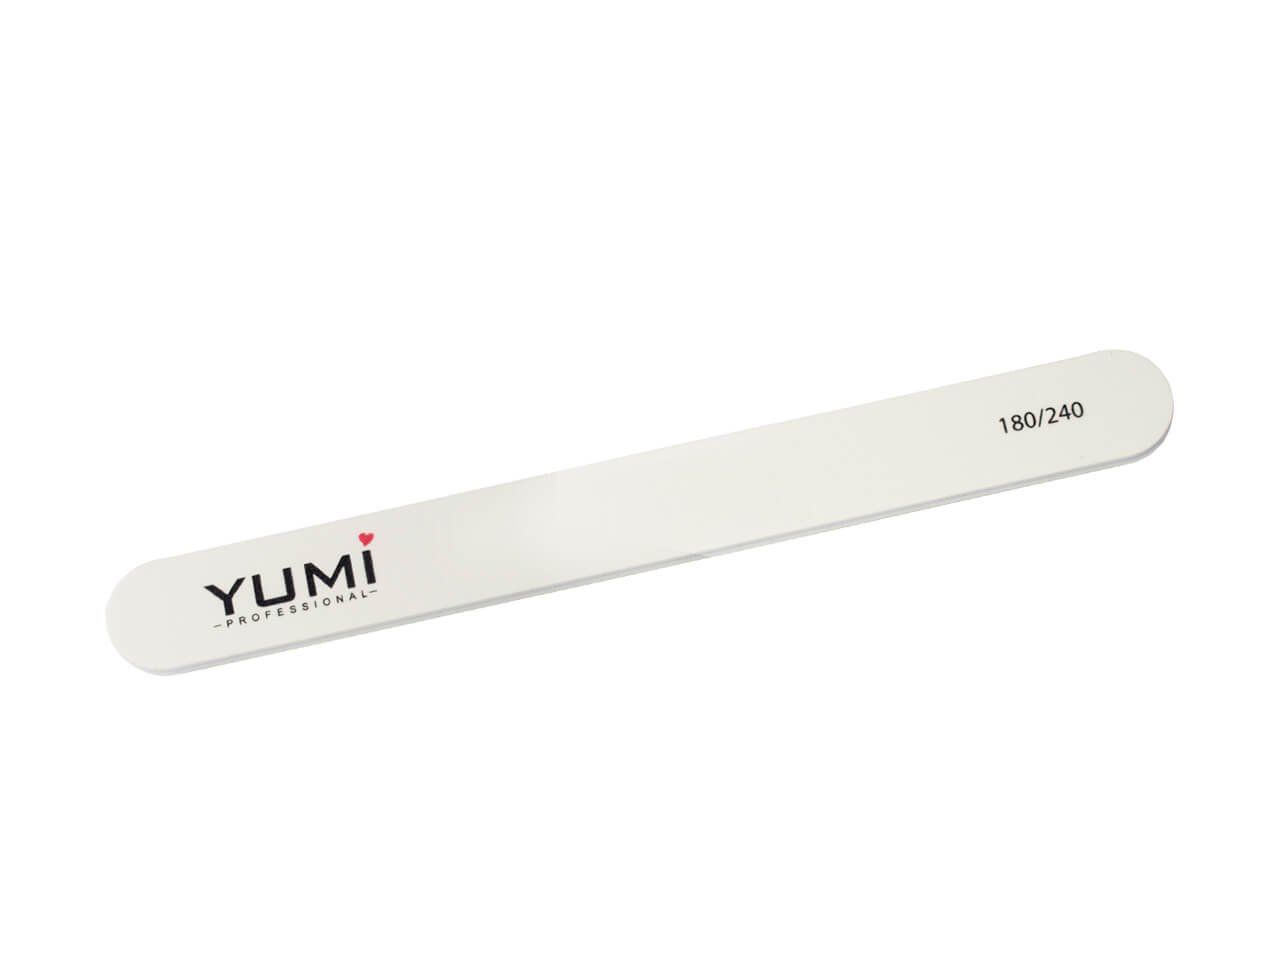 YUMI Professional Пилка прямая 180/240 гритт 50077